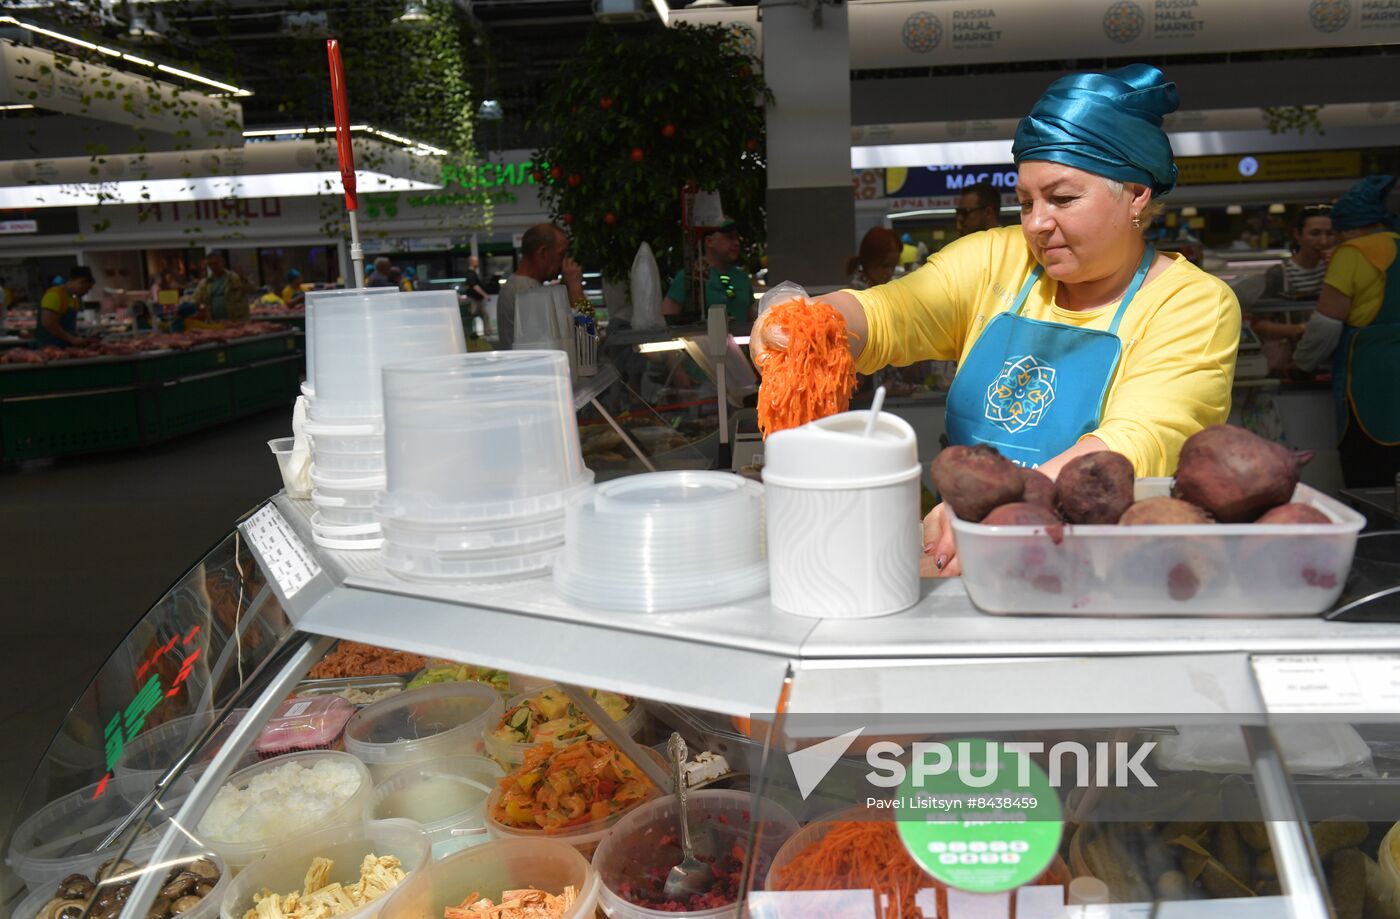 KAZANFORUM 2023. World Congress of Tatars participants visit Russia Halal Market